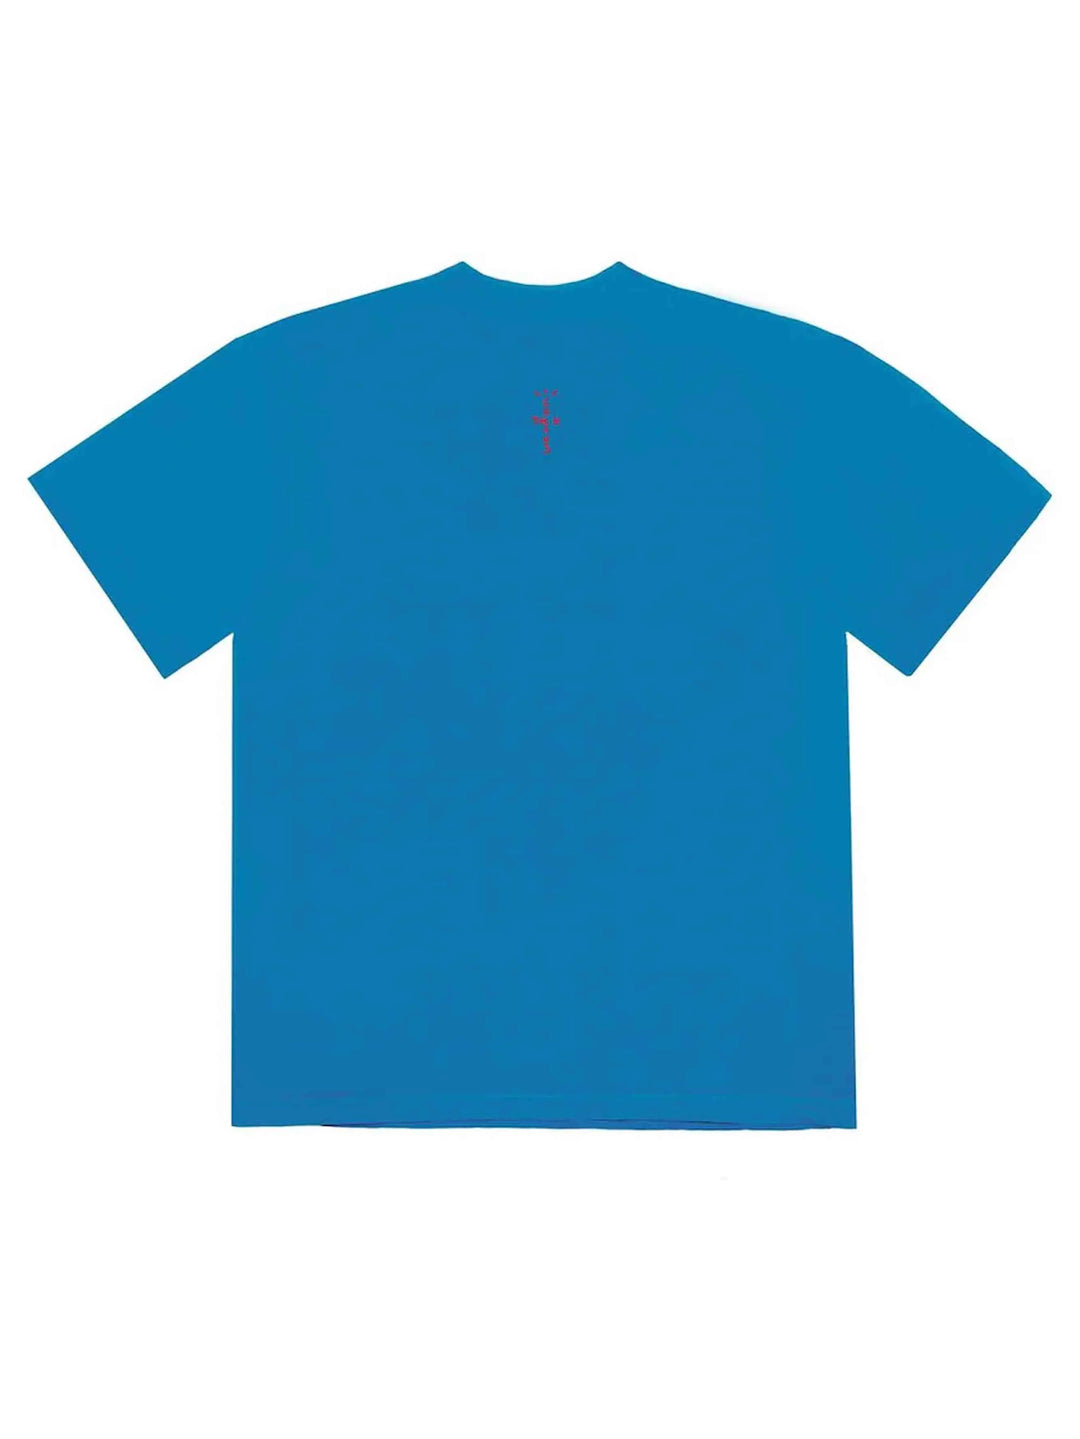 Travis Scott x McDonald's All American '92 T-shirt Washed Blue Prior